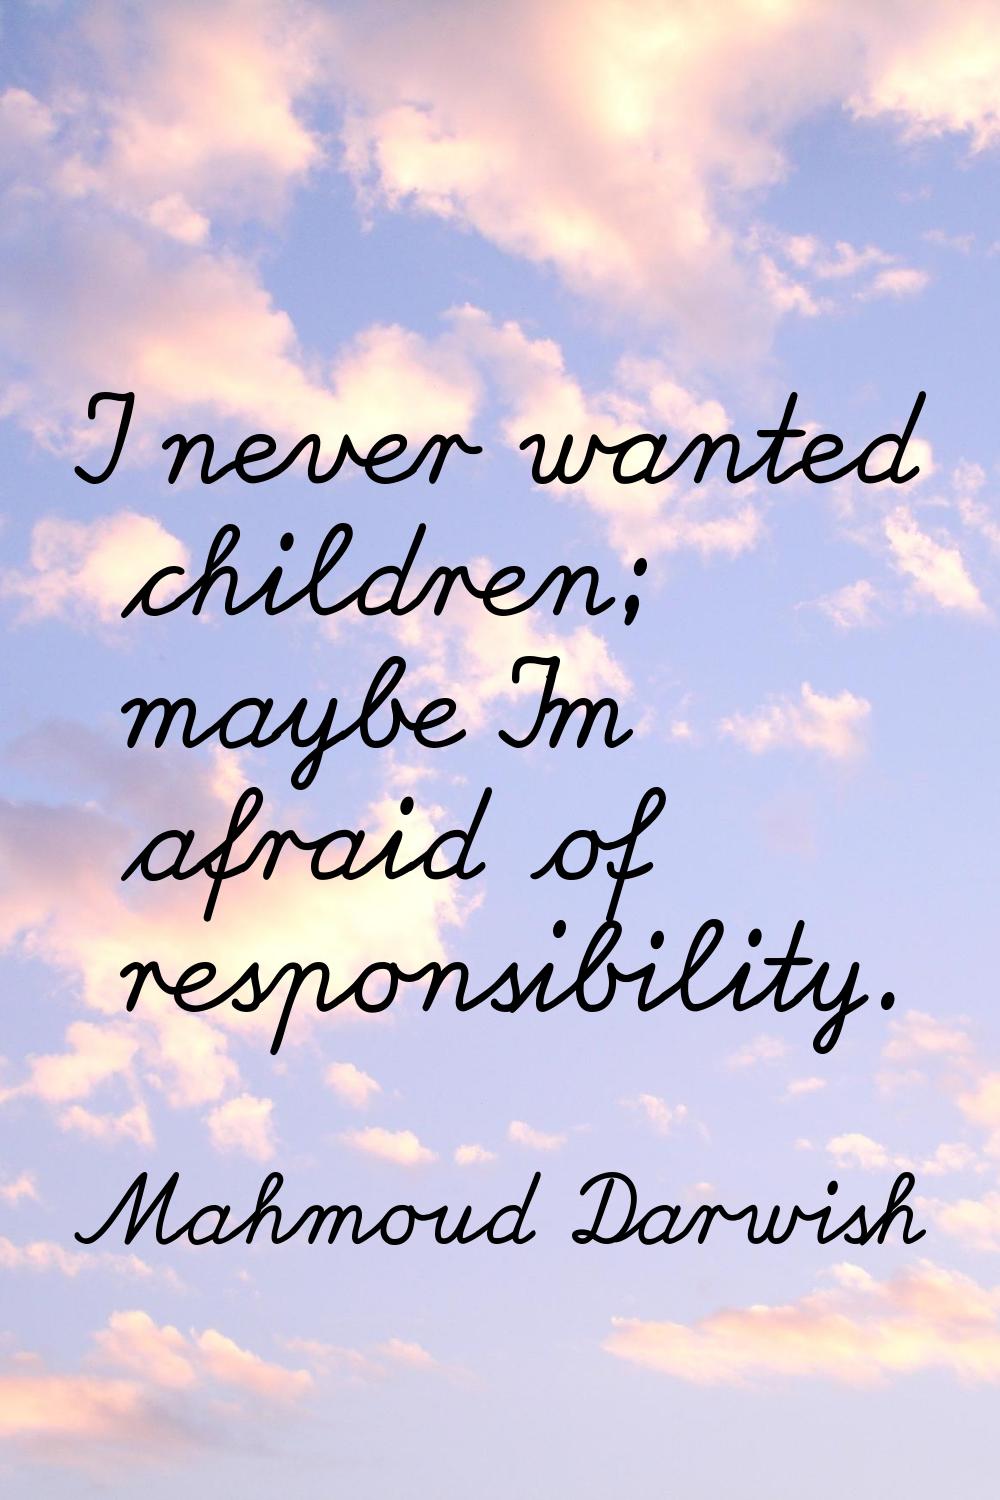 I never wanted children; maybe I'm afraid of responsibility.